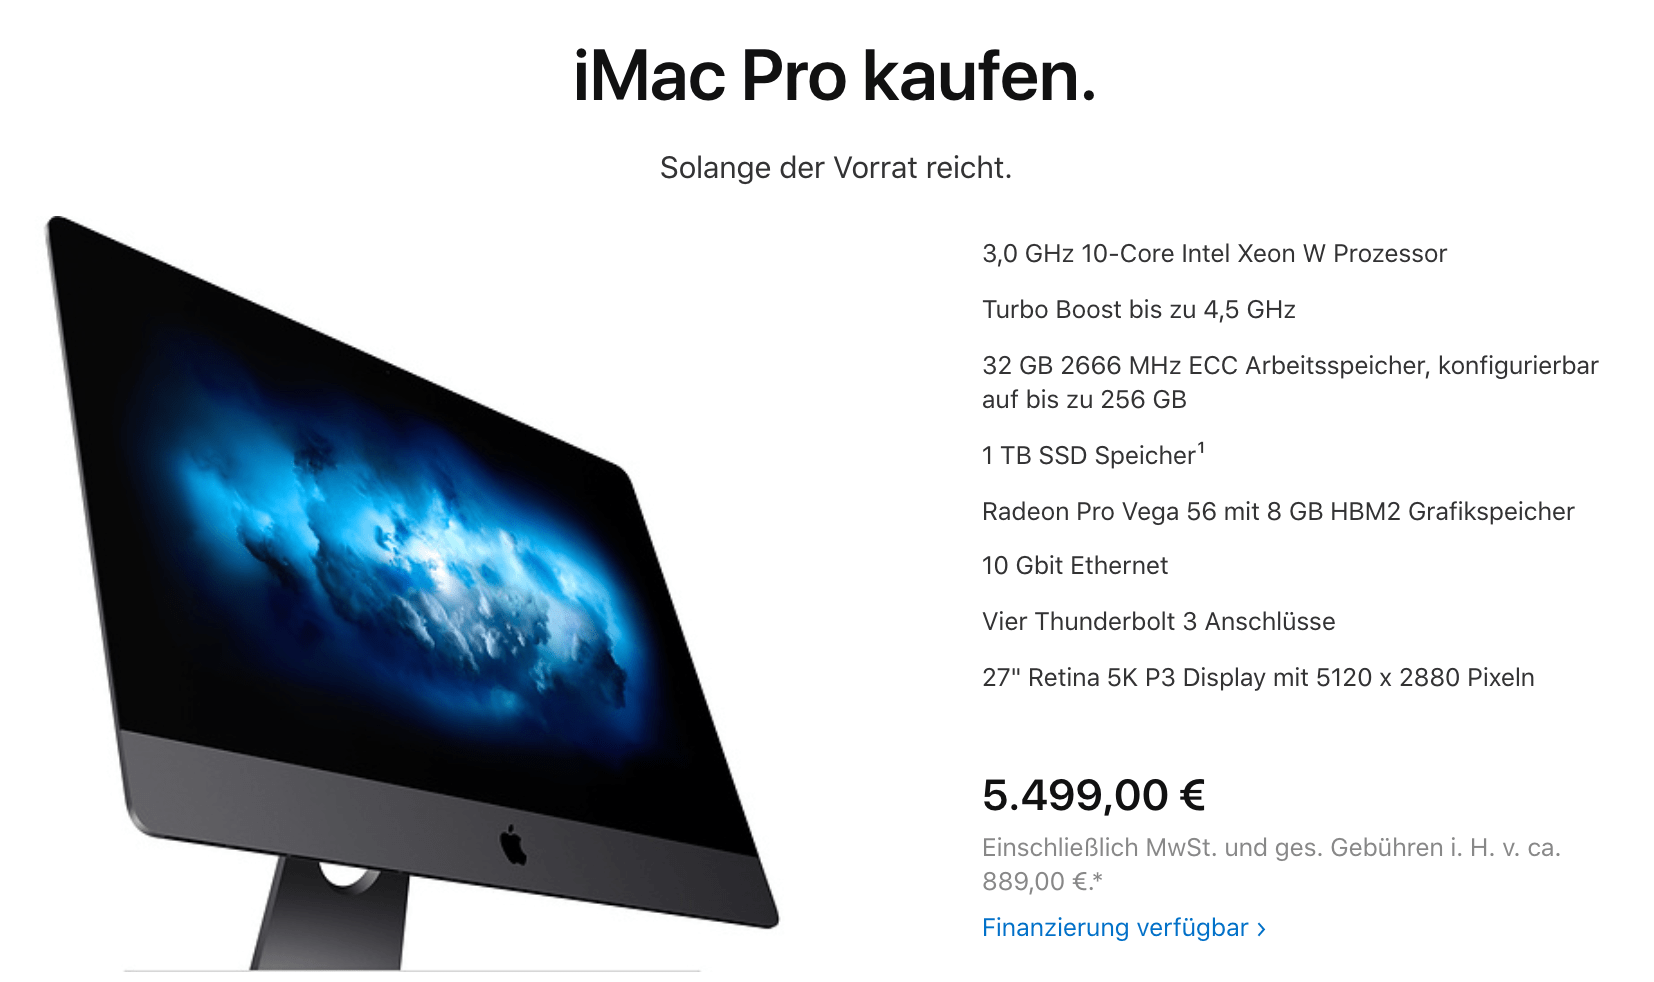 iMac Pro eingestellt